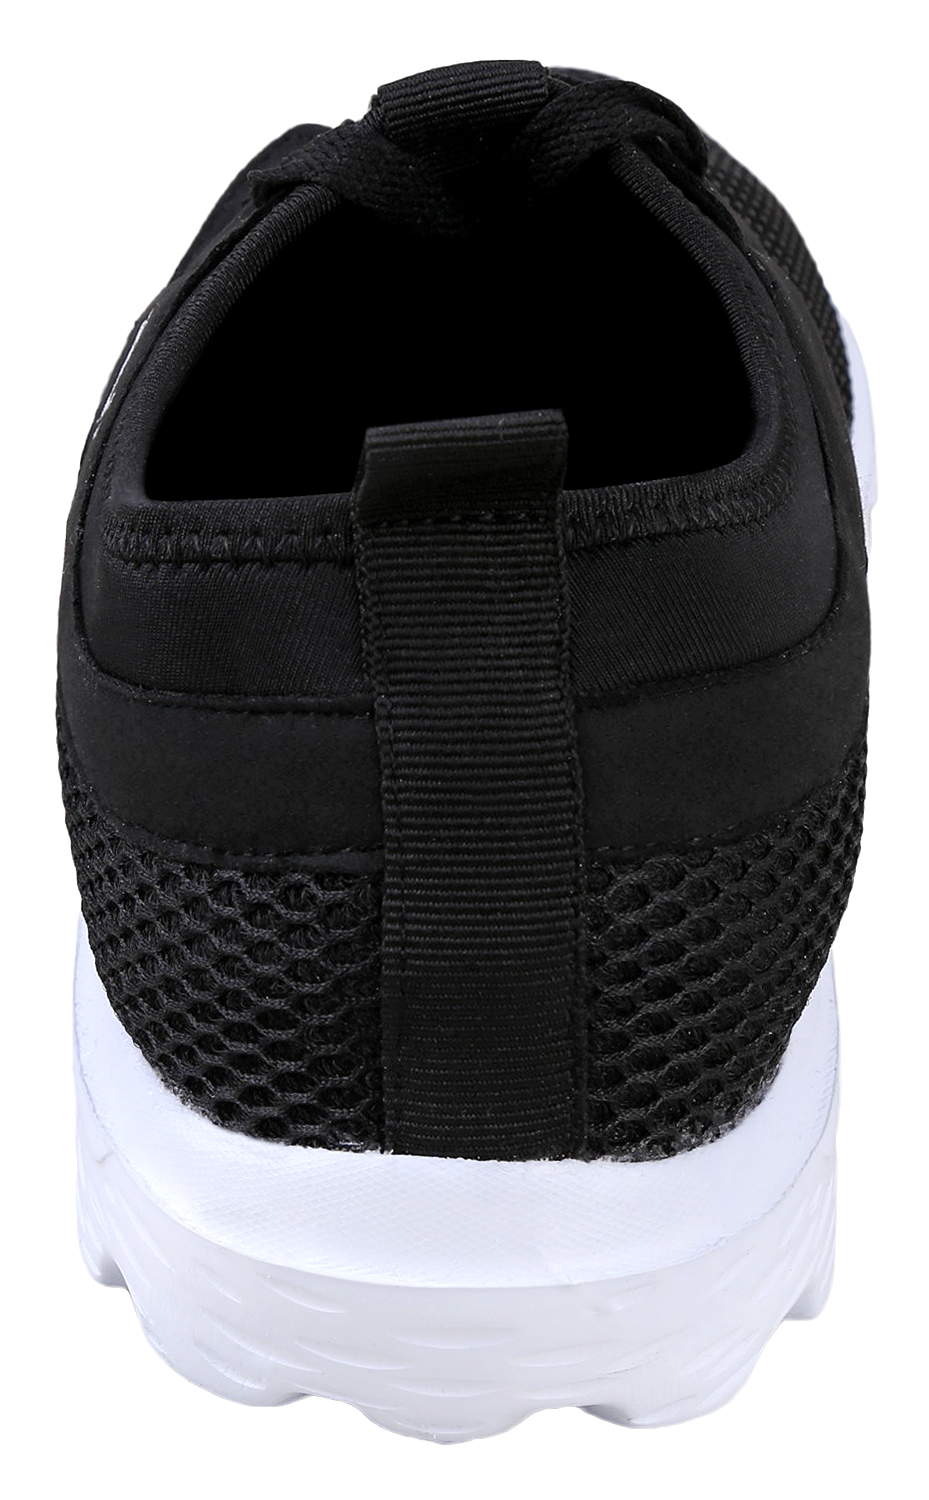 Urban Fox Men's Breeze Lightweight Shoes | Lightweight Shoes for Men | Casual Shoes | Walking Shoes for Men | Black/White 9 M US - image 4 of 7